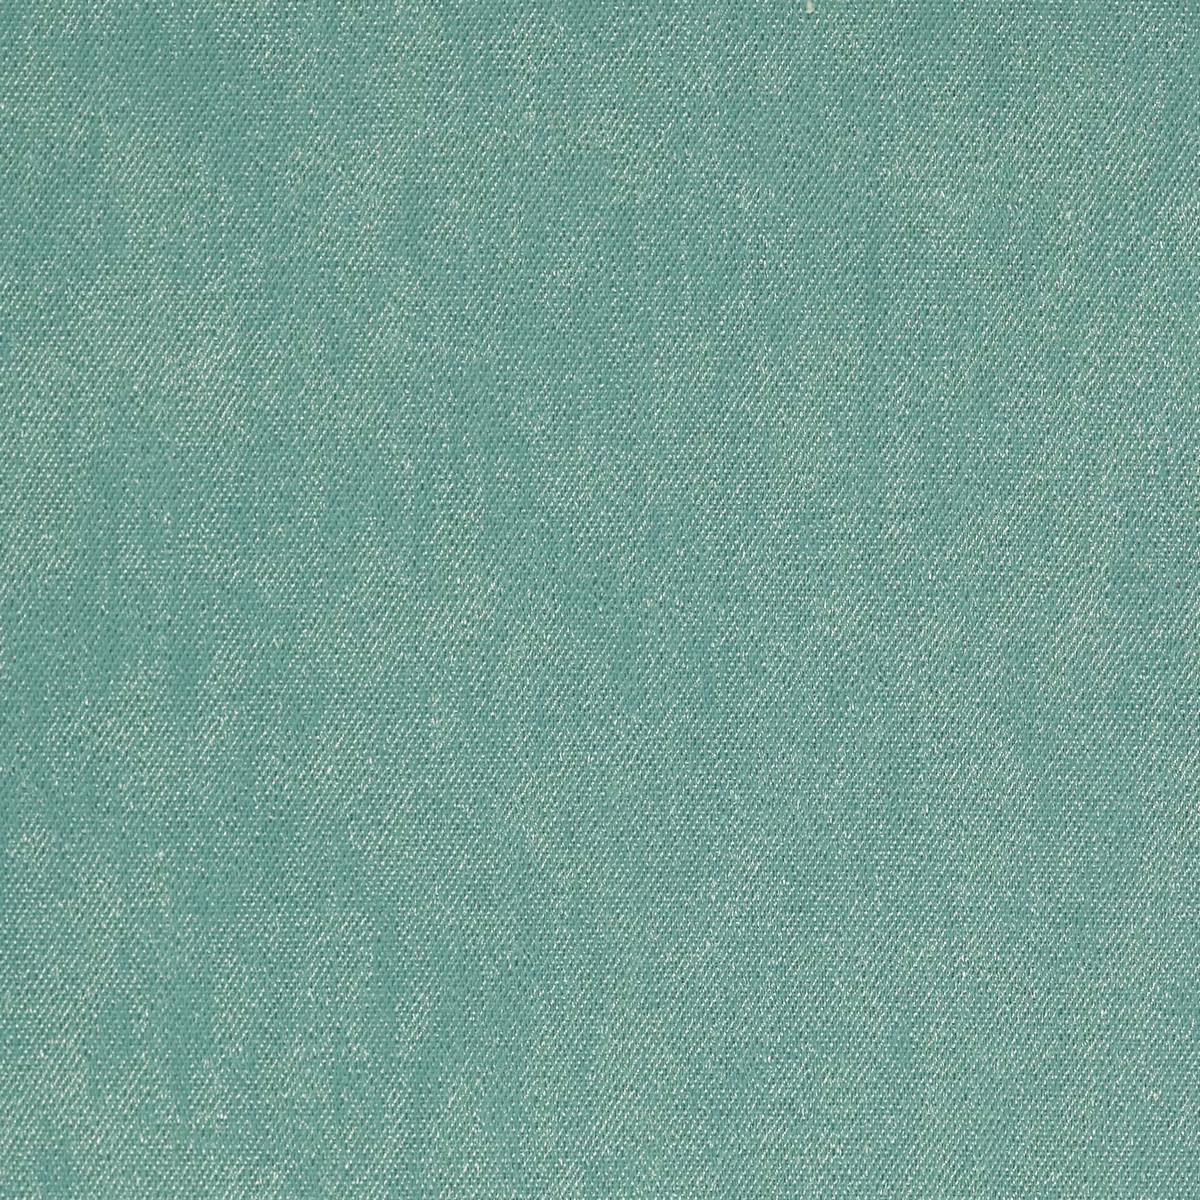 Spectro Eucalyptus Fabric by Harlequin